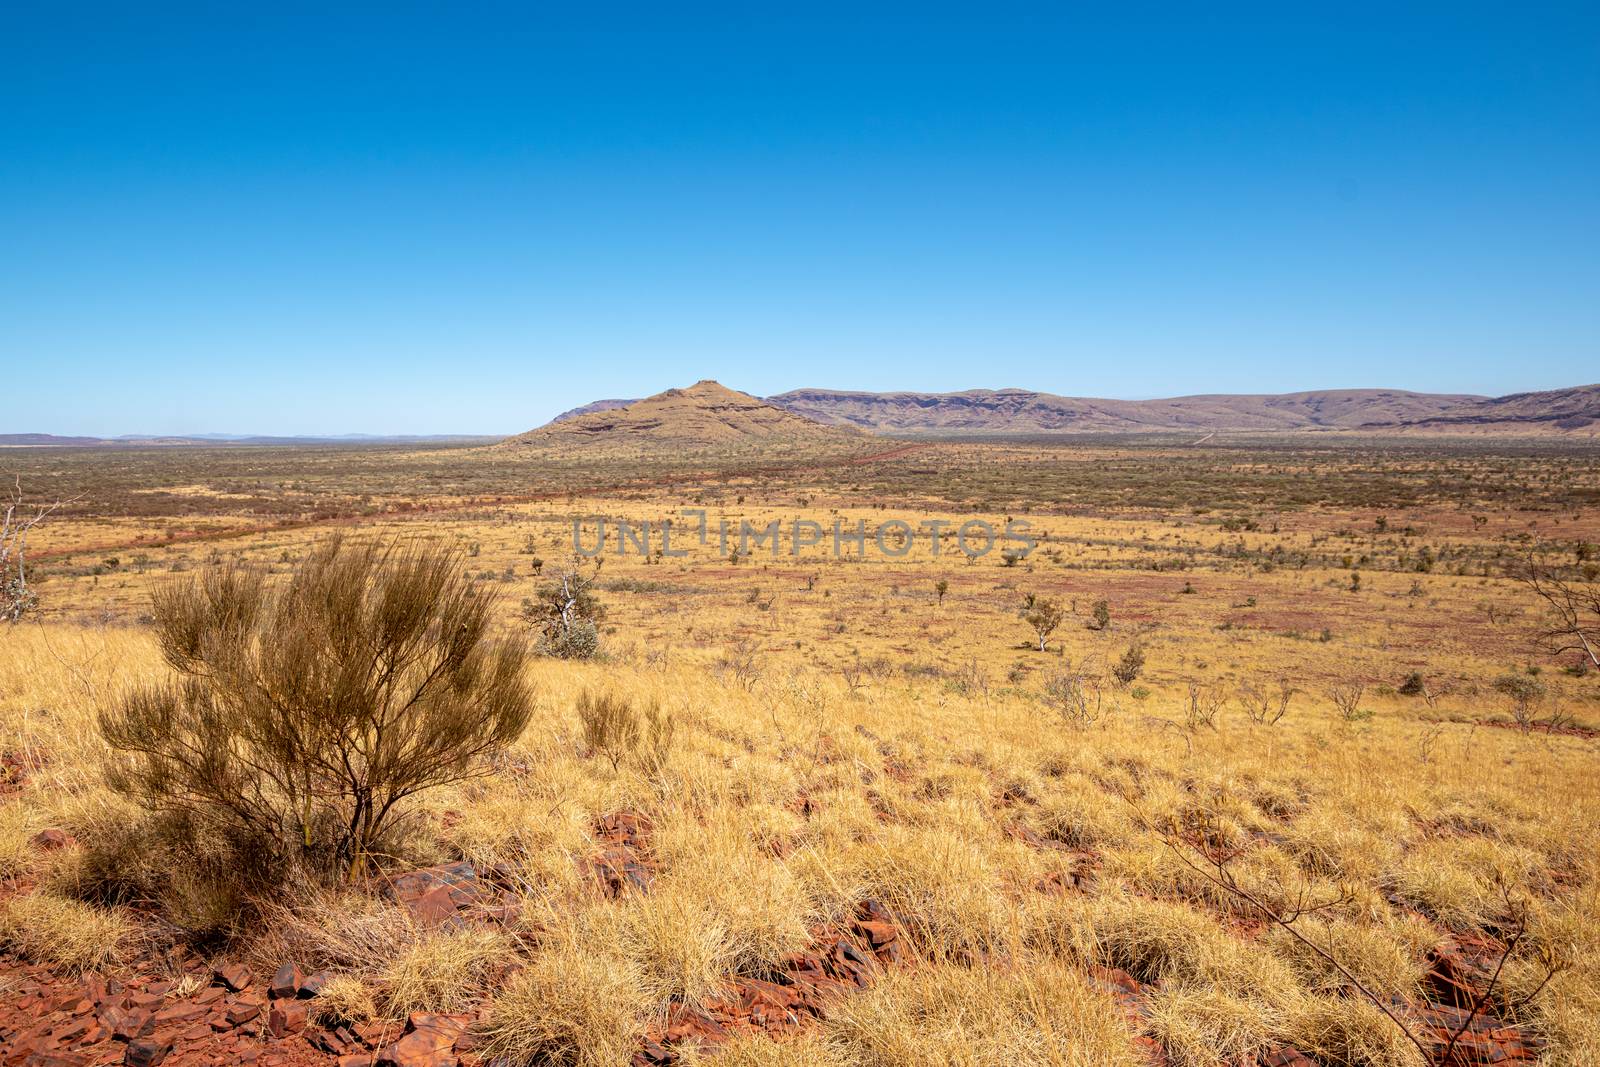 Mount Bruce view over dry landscape at Karijini National Park Australia